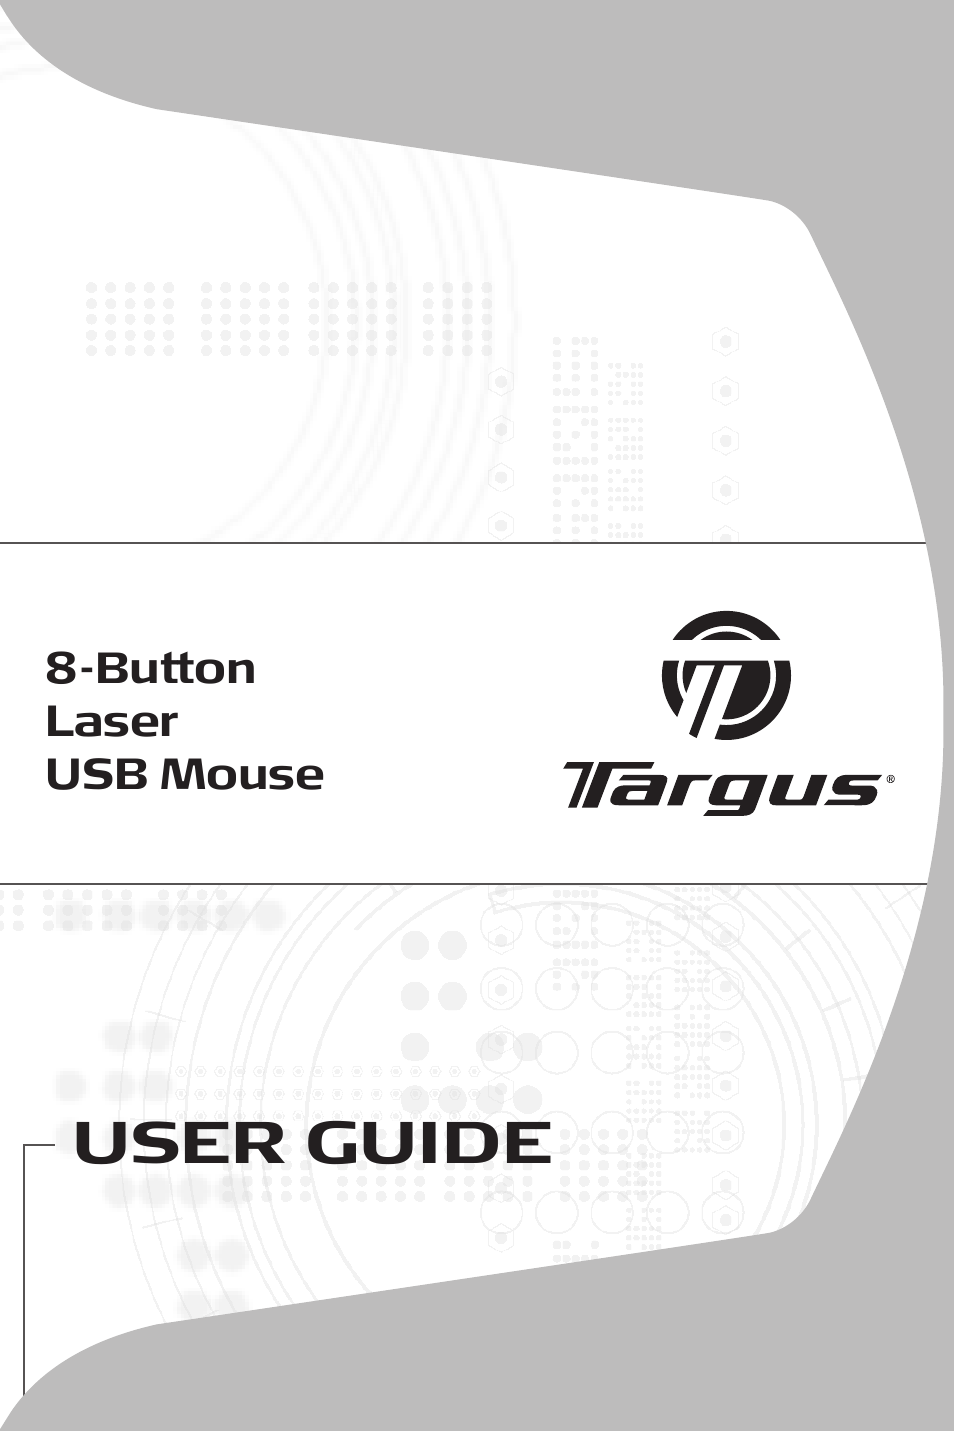 USB mouse